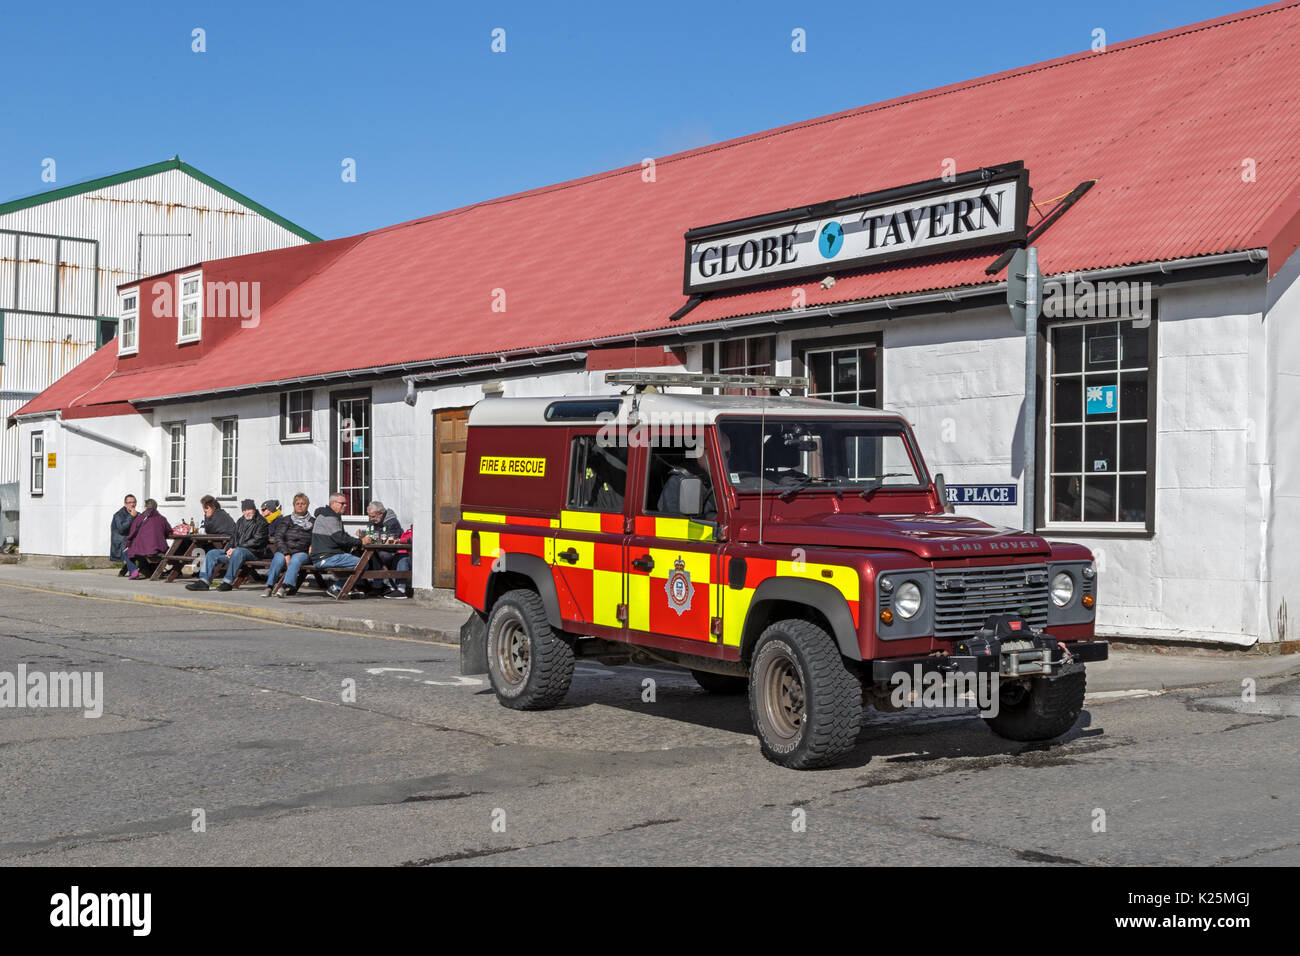 Globe Tavern and Fire & Rescue Vehicle Ross Road (main street) Stanley Falkland Island (Malvinas) Stock Photo